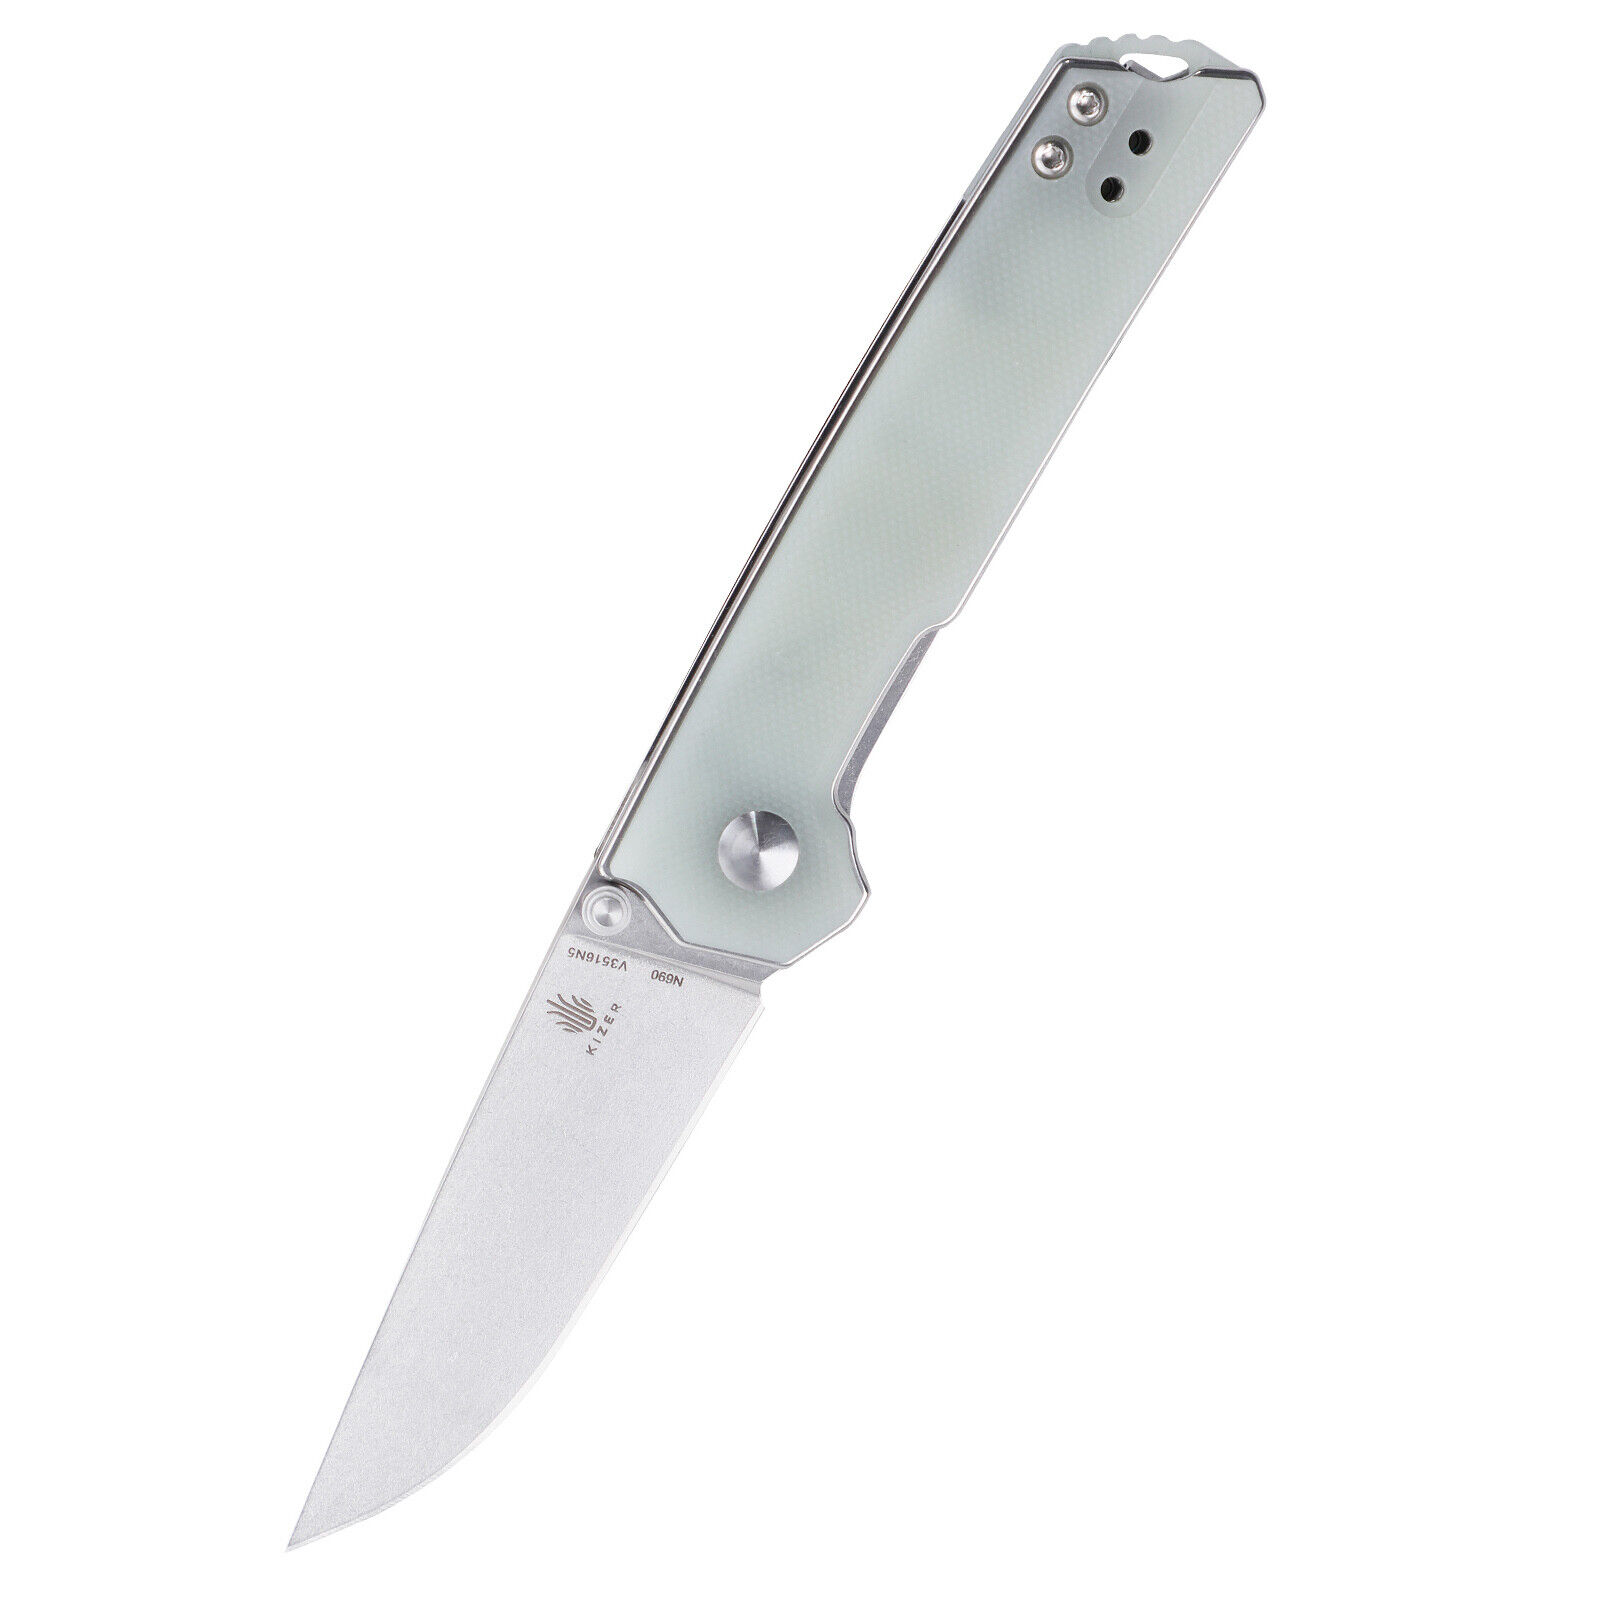 Kizer Vanguard Domin Mini G10 Handle N690 Steel EDC Folding Knife  V3516N5